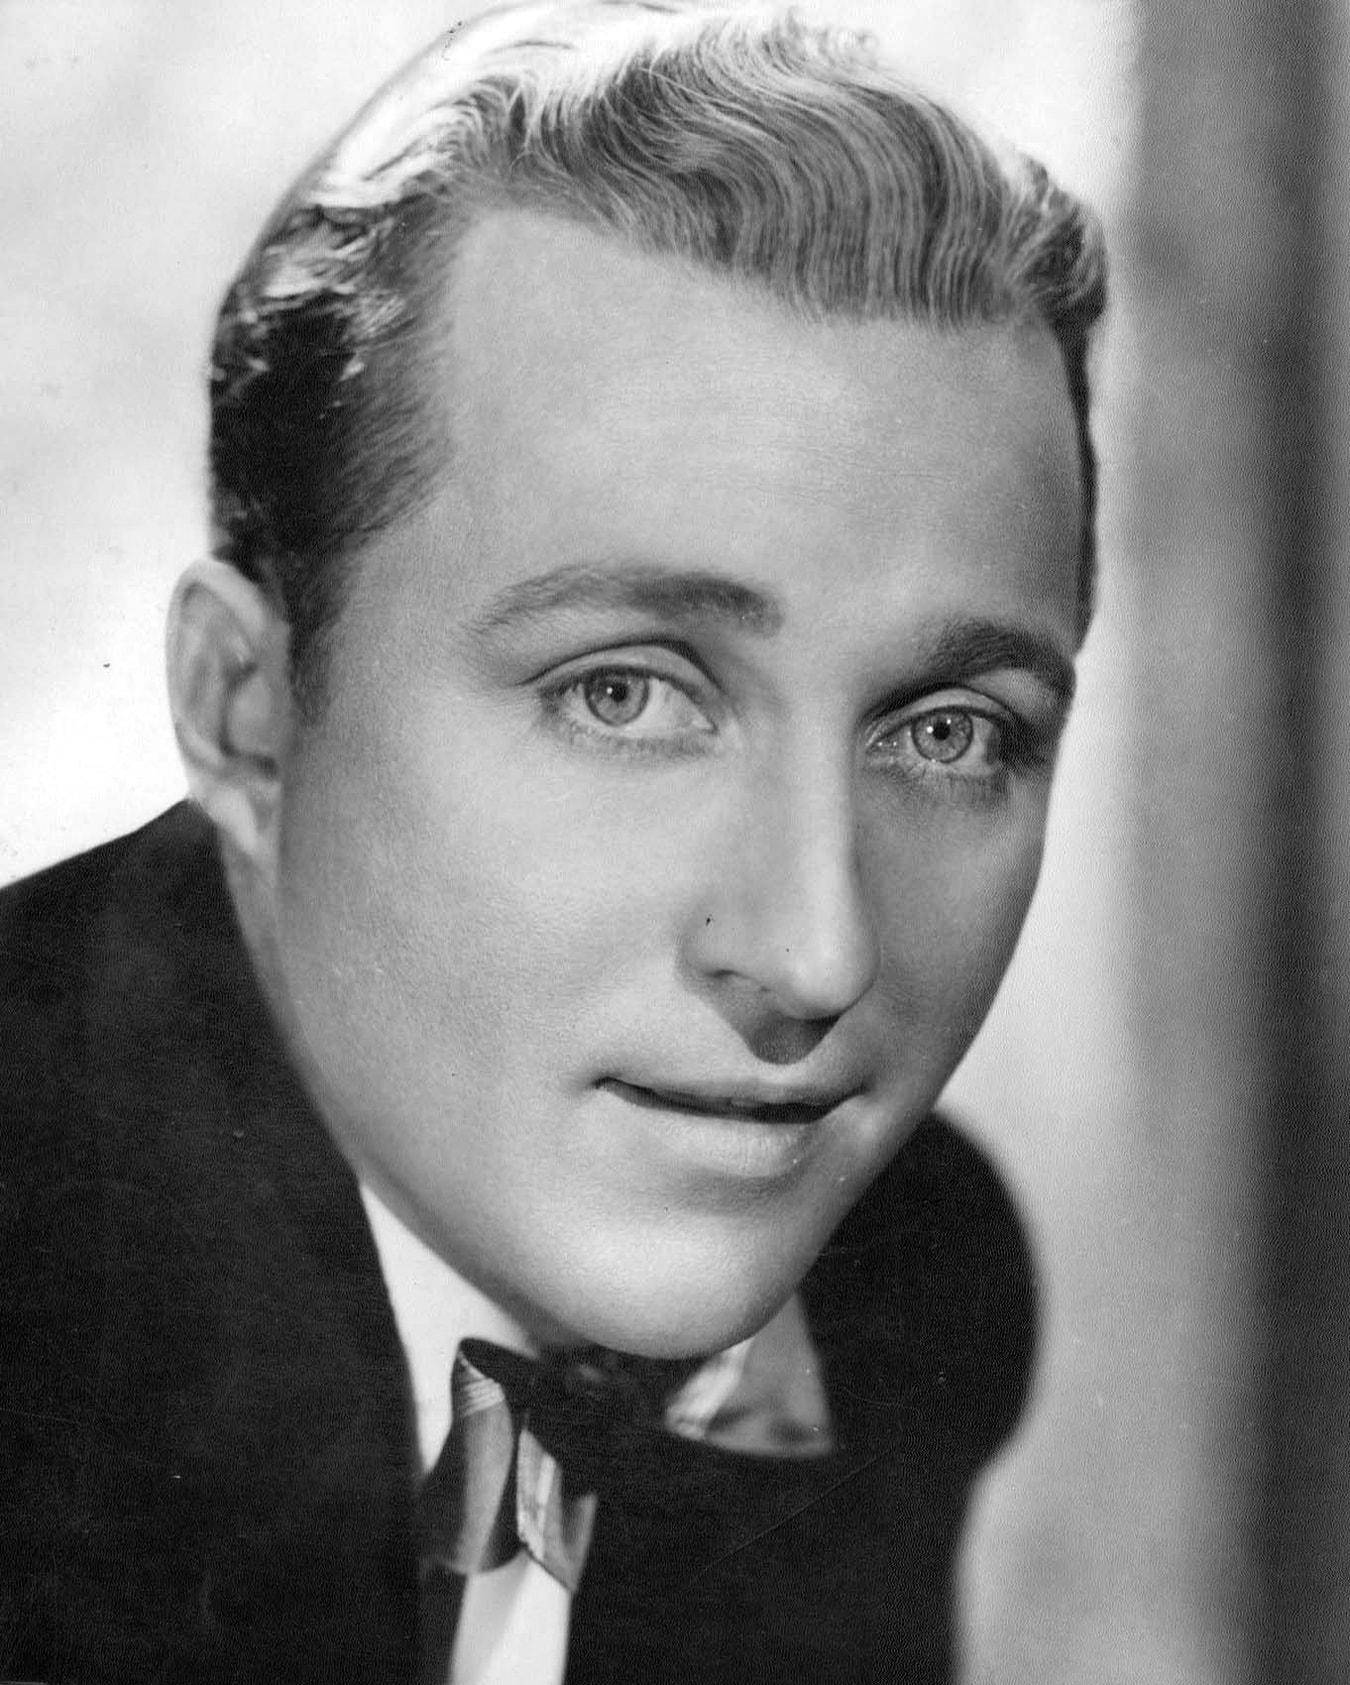 Young Bing Crosby Wallpaper